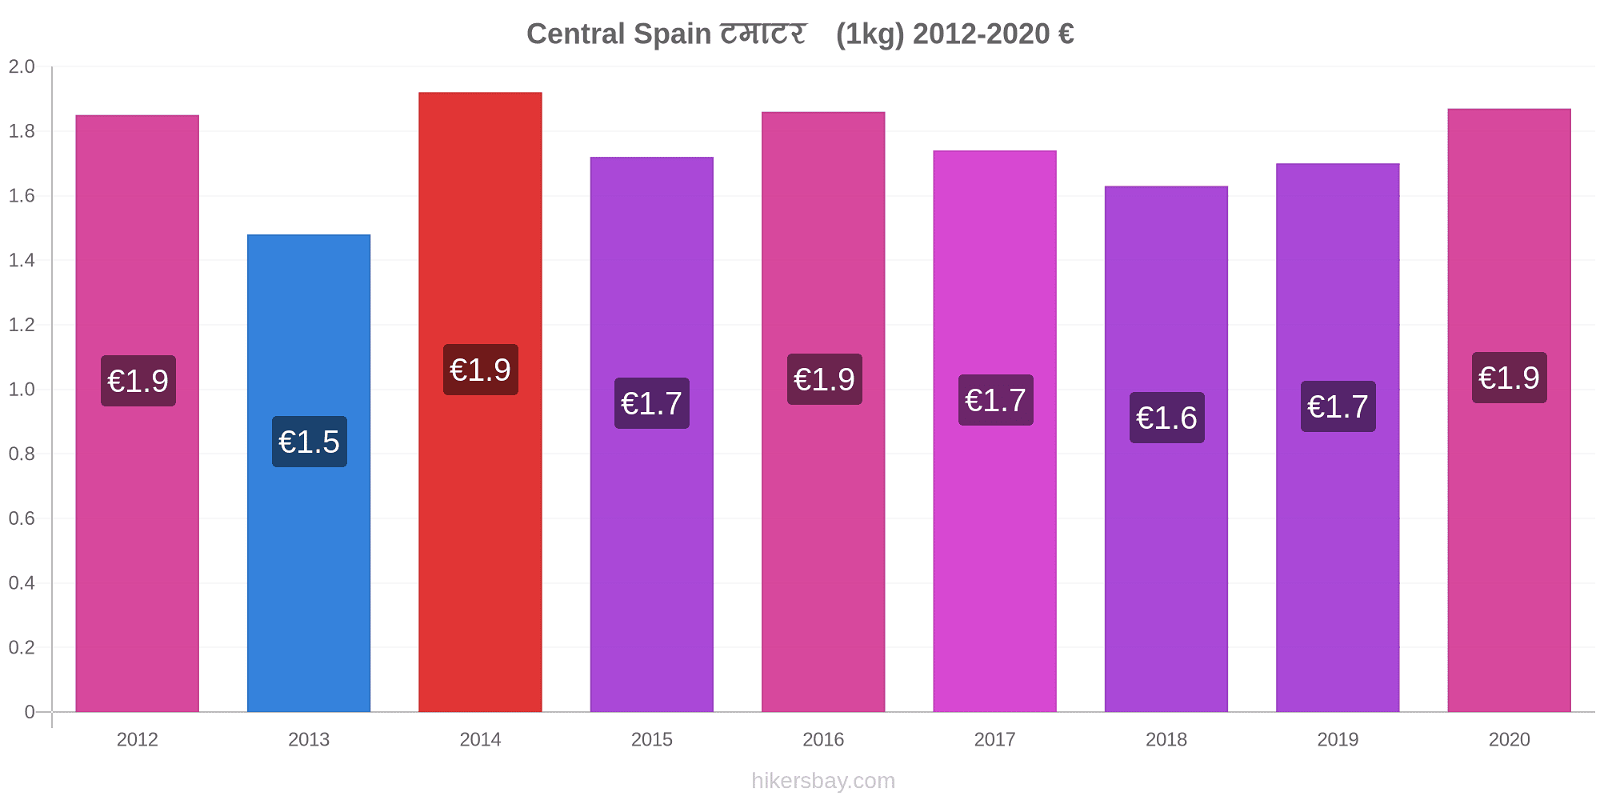 Central Spain मूल्य परिवर्तन टमाटर (1kg) hikersbay.com